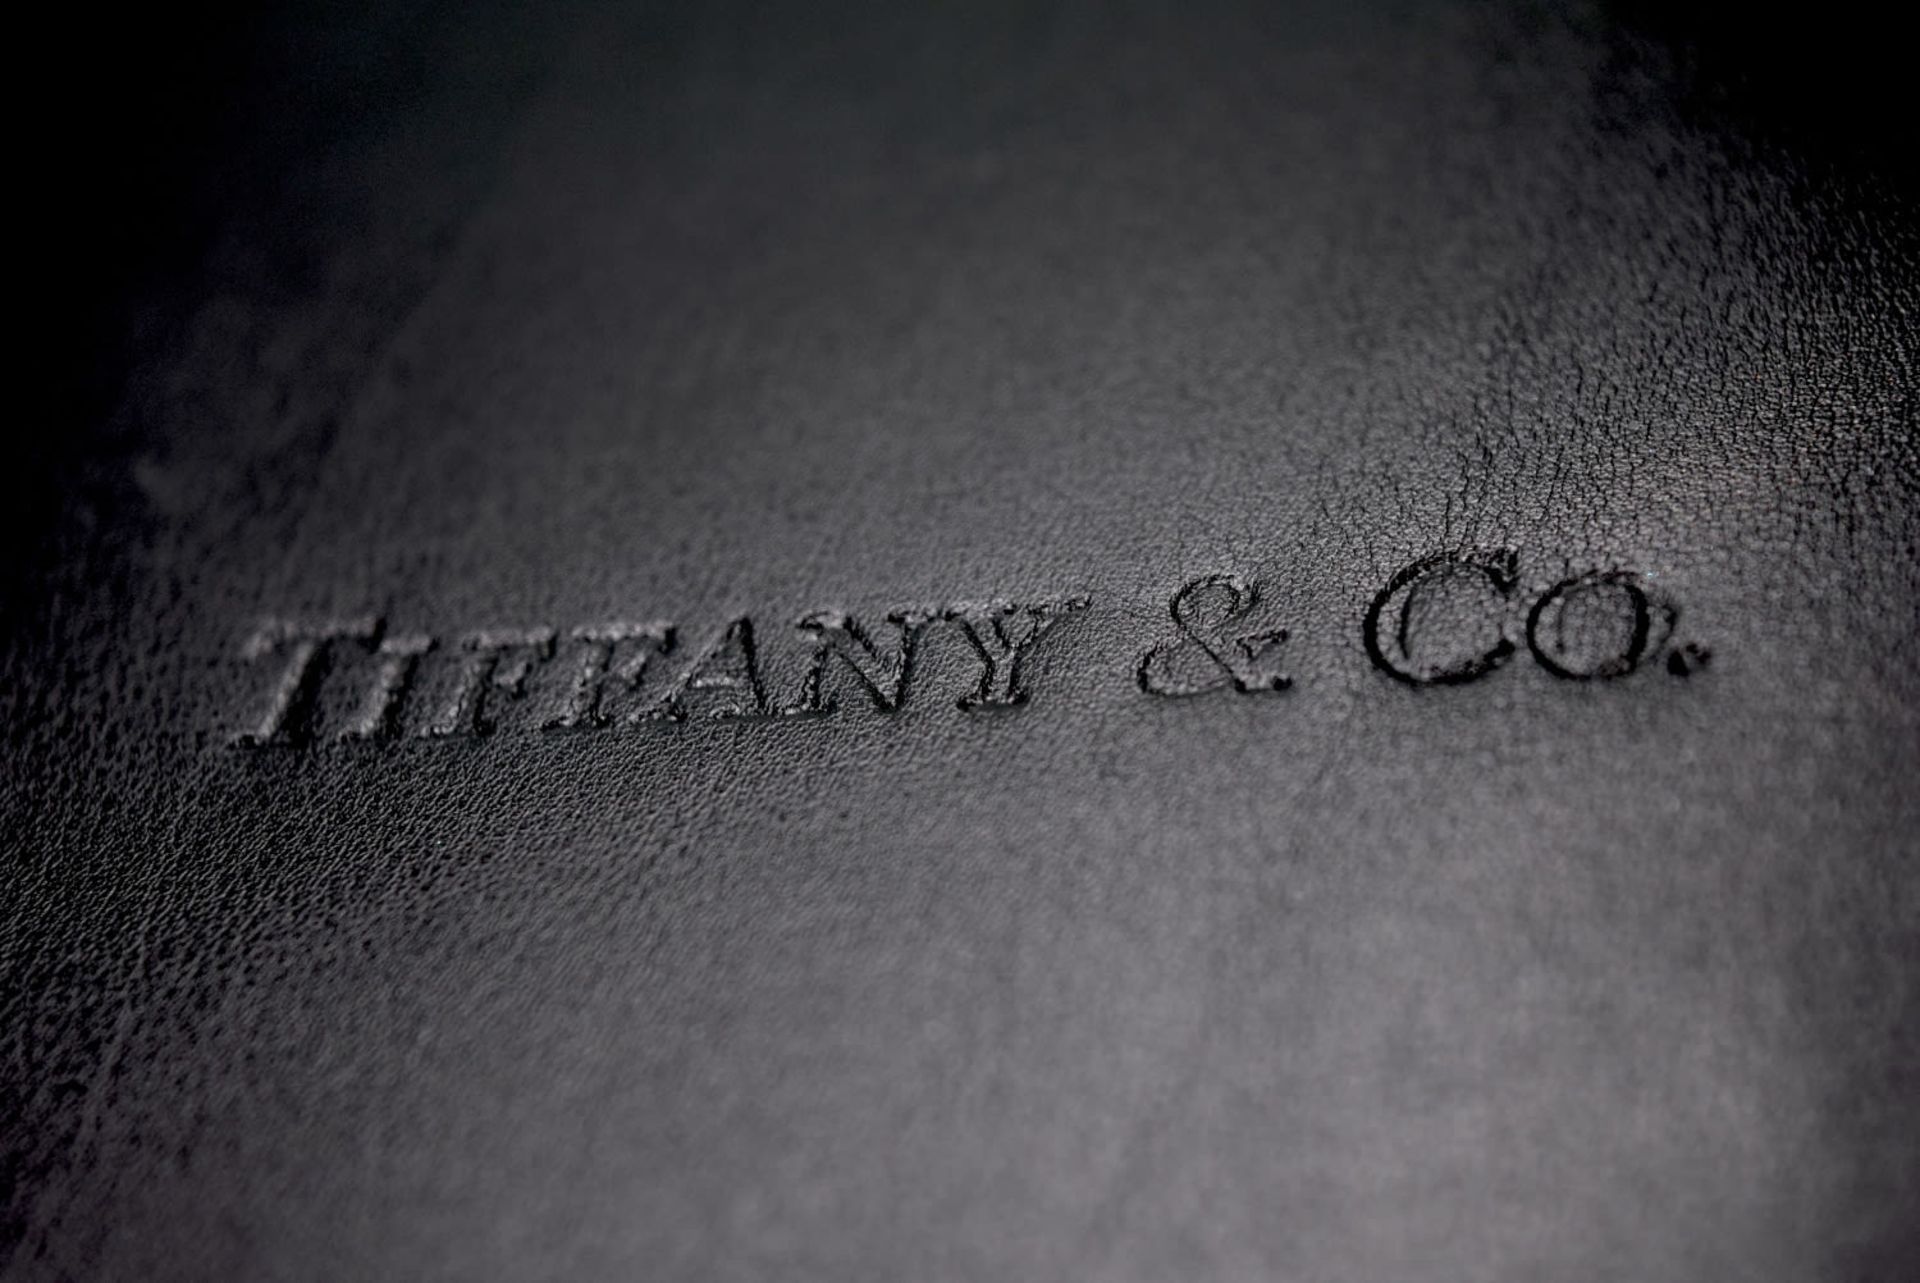 *HARRODS* TIFFANY & CO PLATINUM VVS2 DIAMOND SOLITAIRE RING ""THE TIFFANY SETTING®"" - BOX & CERT - Image 10 of 17